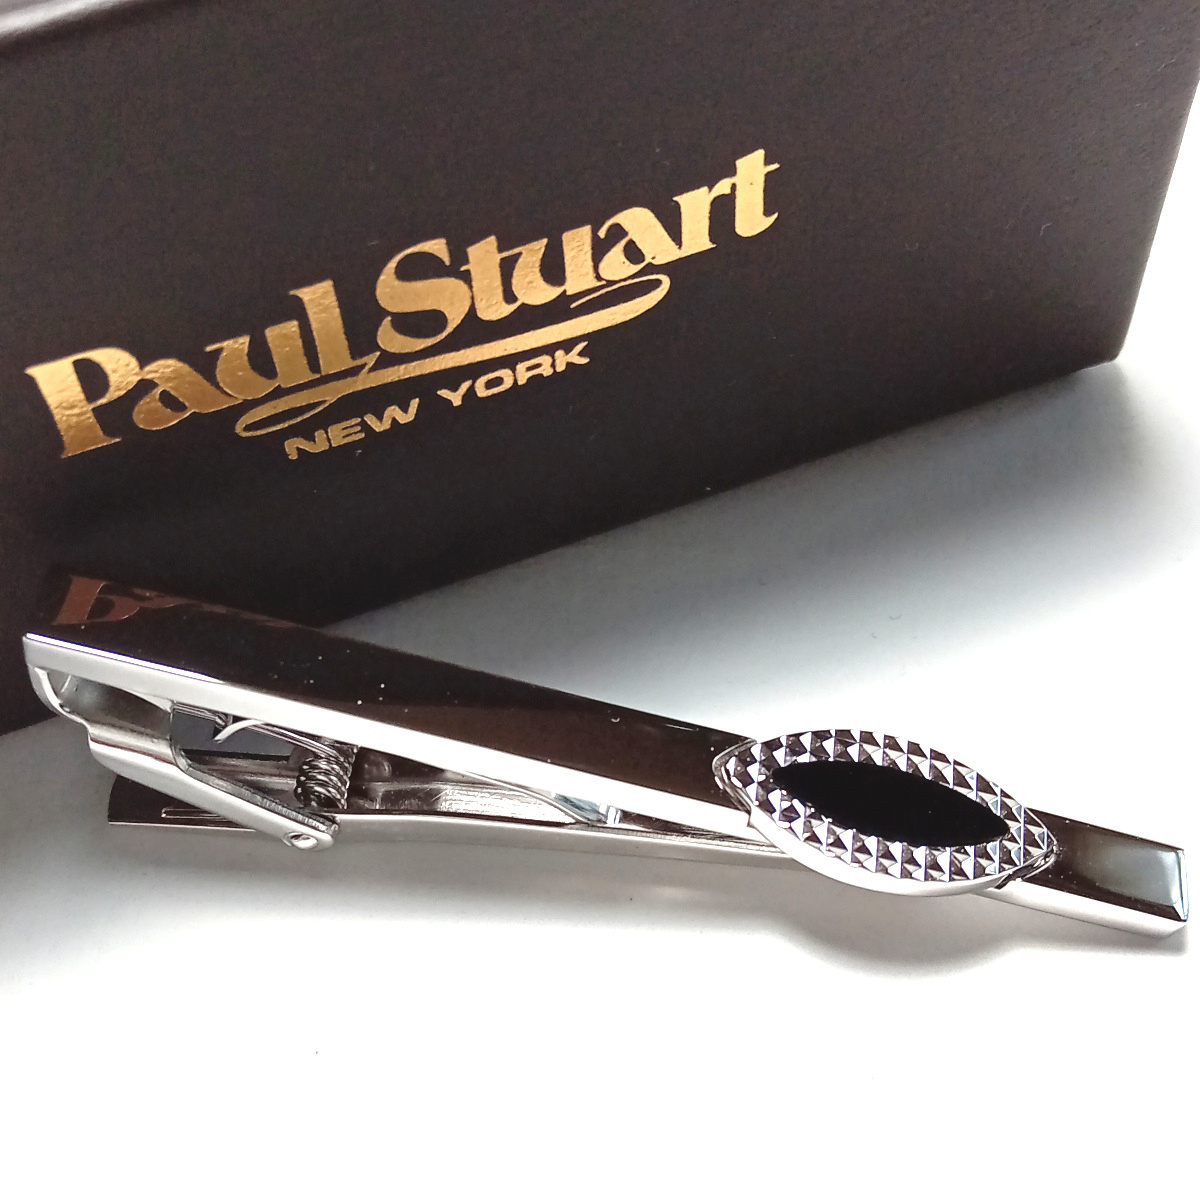 [pst164]Paul Stuart paul (pole) Stuart necktie pin Thai bar silver × black black onyx diamond cut 